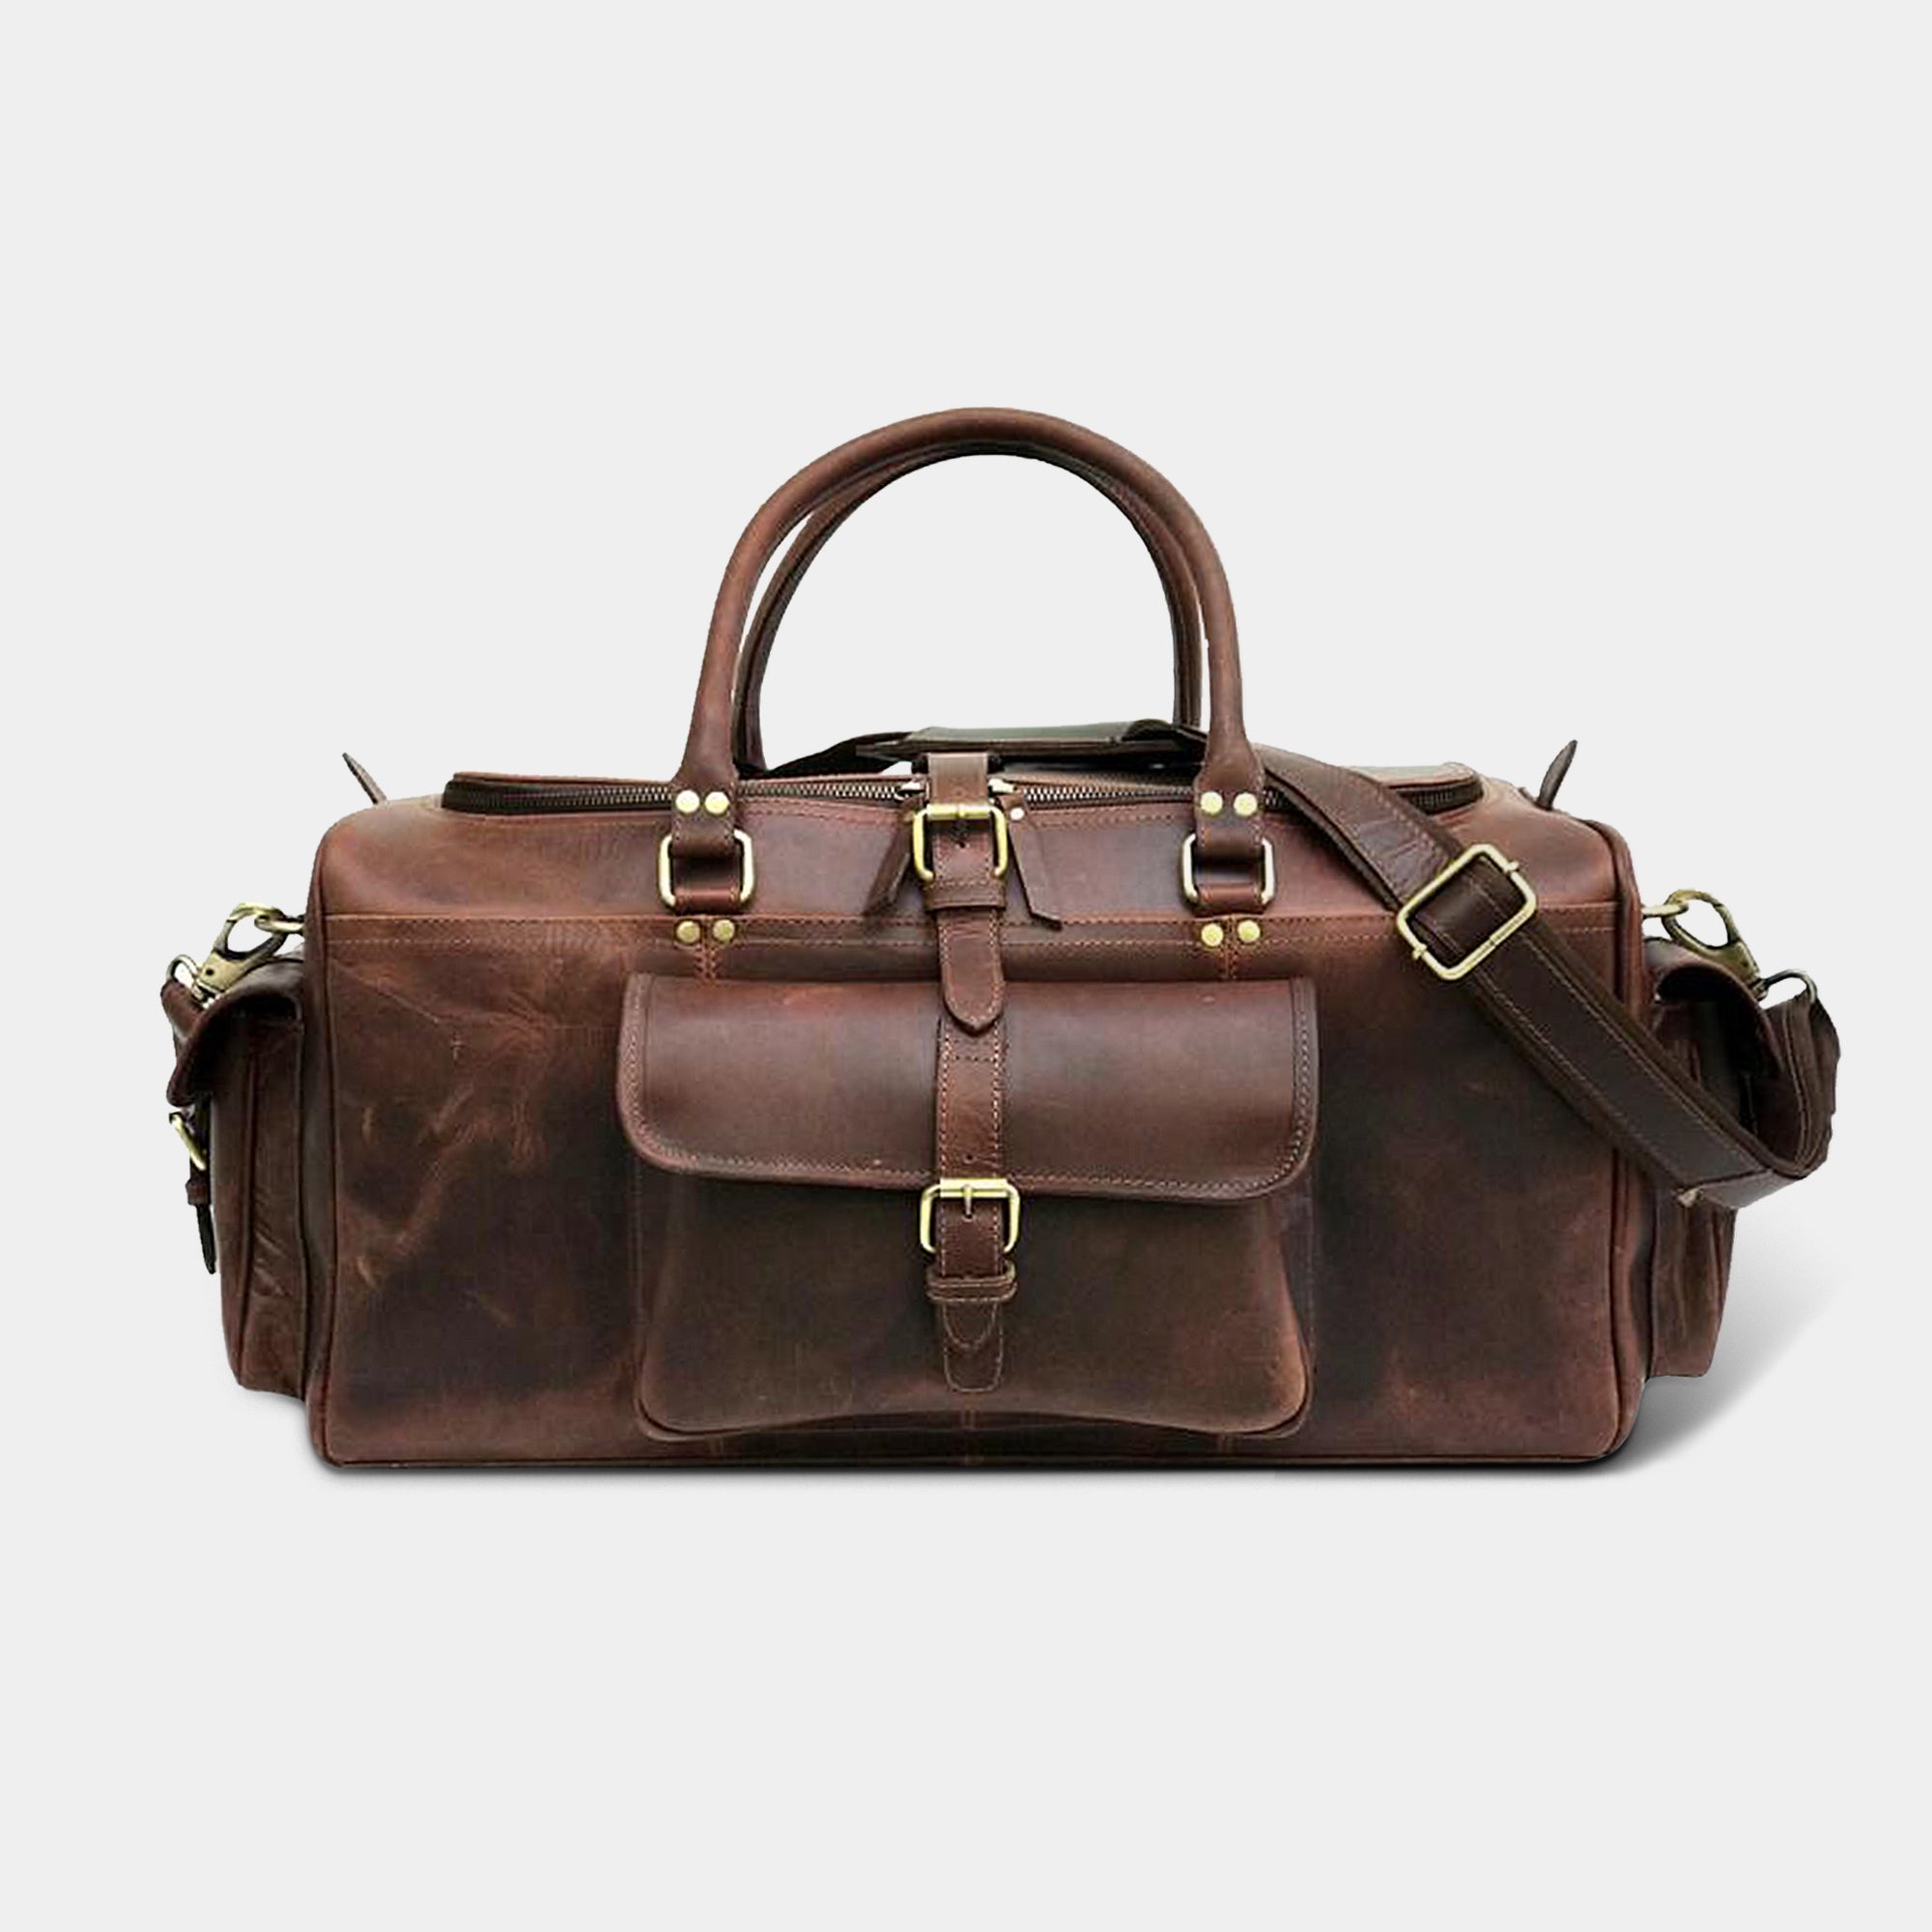 Buffalo Leather Duffle Bag Weekend Travel Aircabin Carryon Luggage